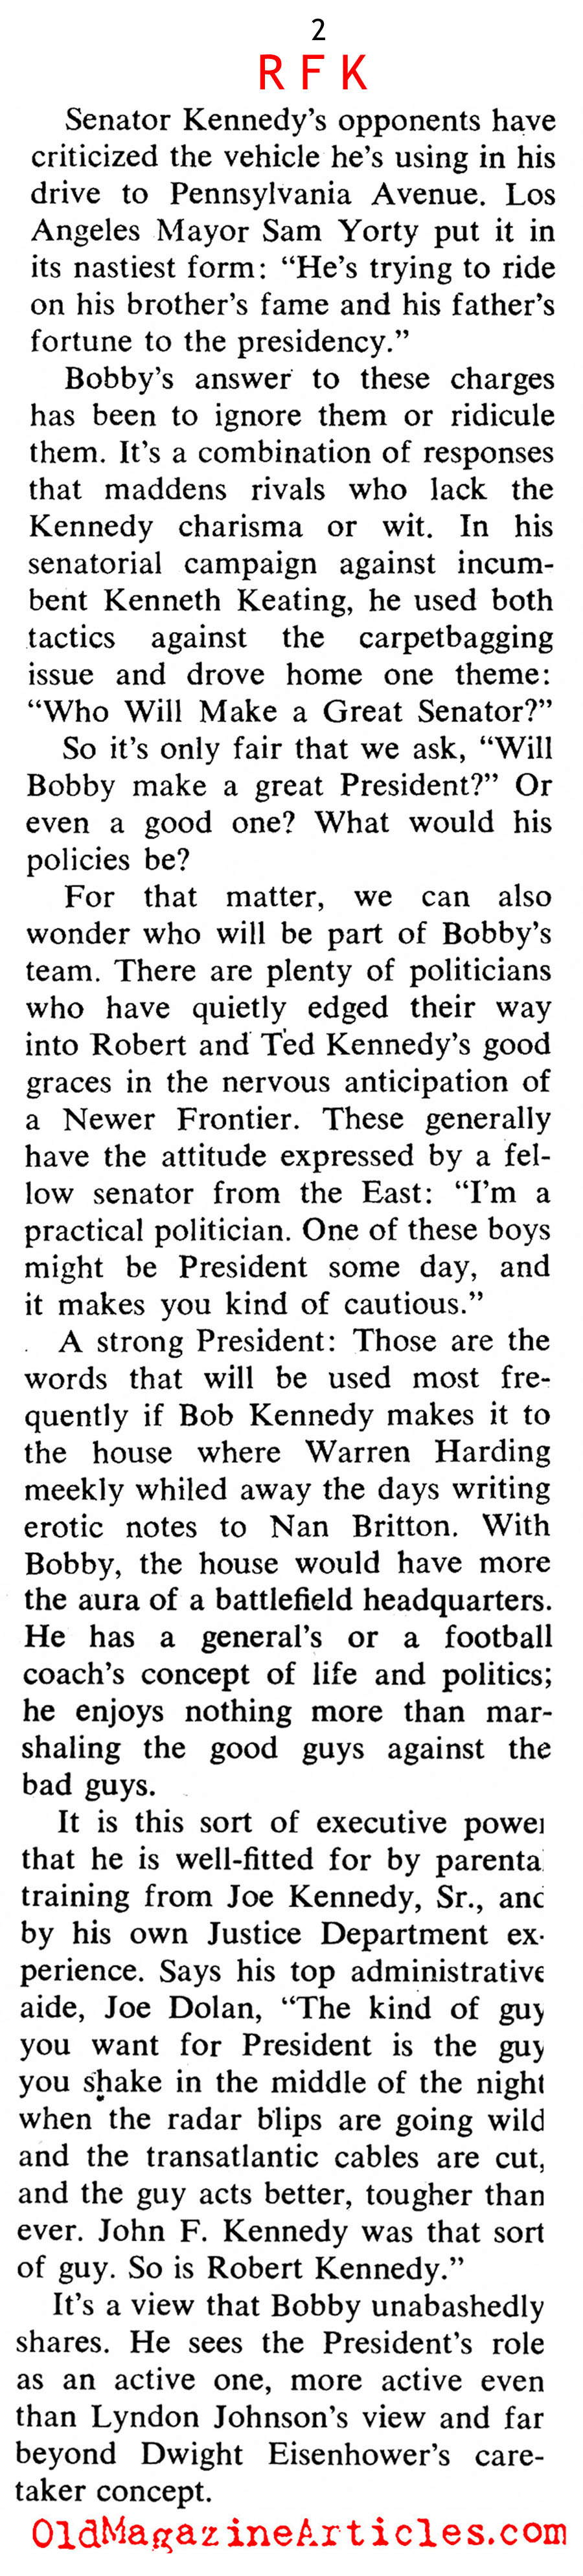 Anticipating A Robert Kennedy Presidency (Coronet Magazine, 1968)